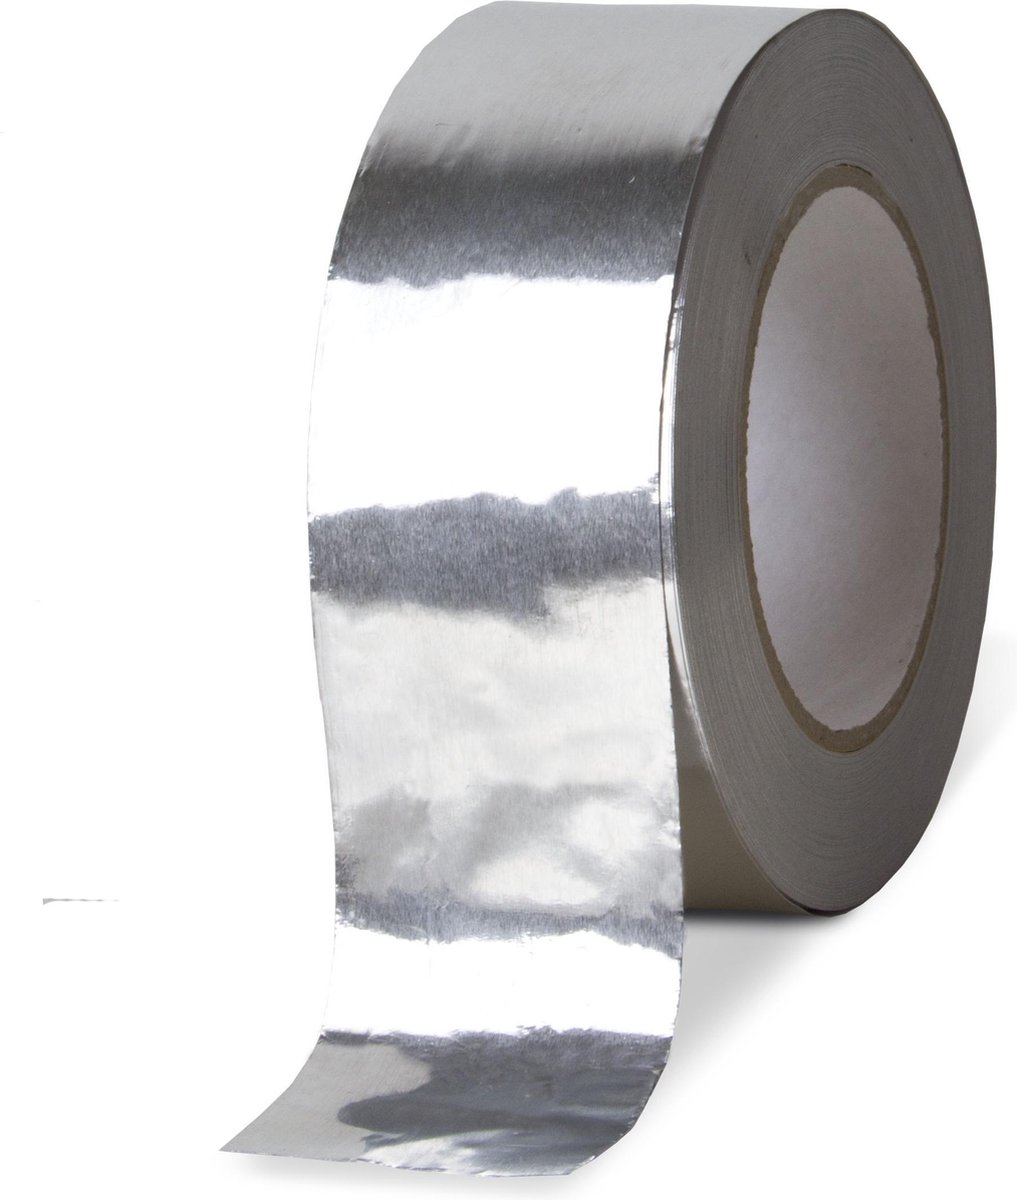 Aluminium Tape 50MM x 50M – Hittebestendig – Isolatie – Dichten Van Naden – Waterdicht – Dampdicht – Hoge Temperatuur - Merkloos